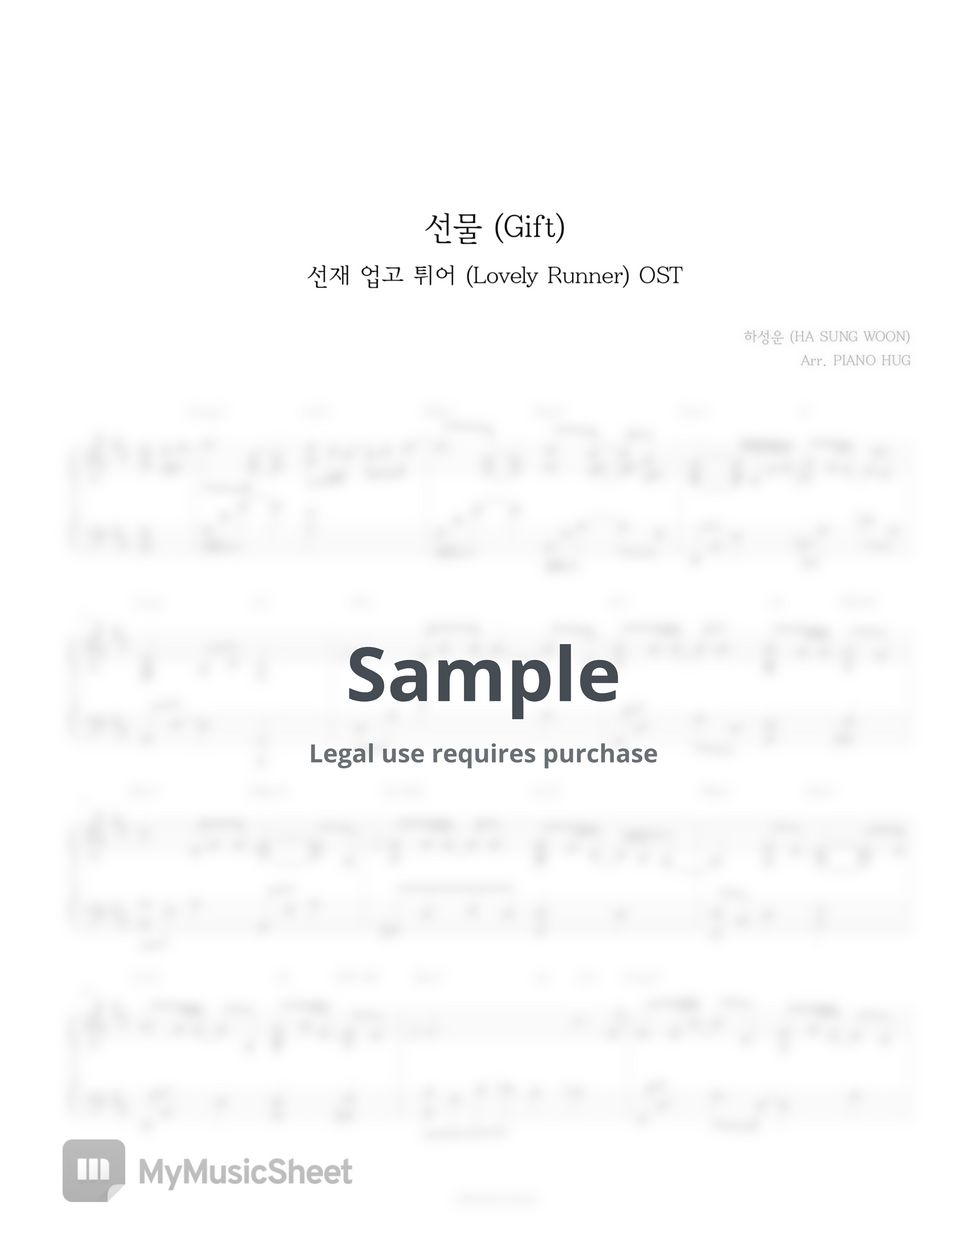 Ha Sung Woon (하성운) - Gift (선물) (Lovely Runner OST) by Piano Hug